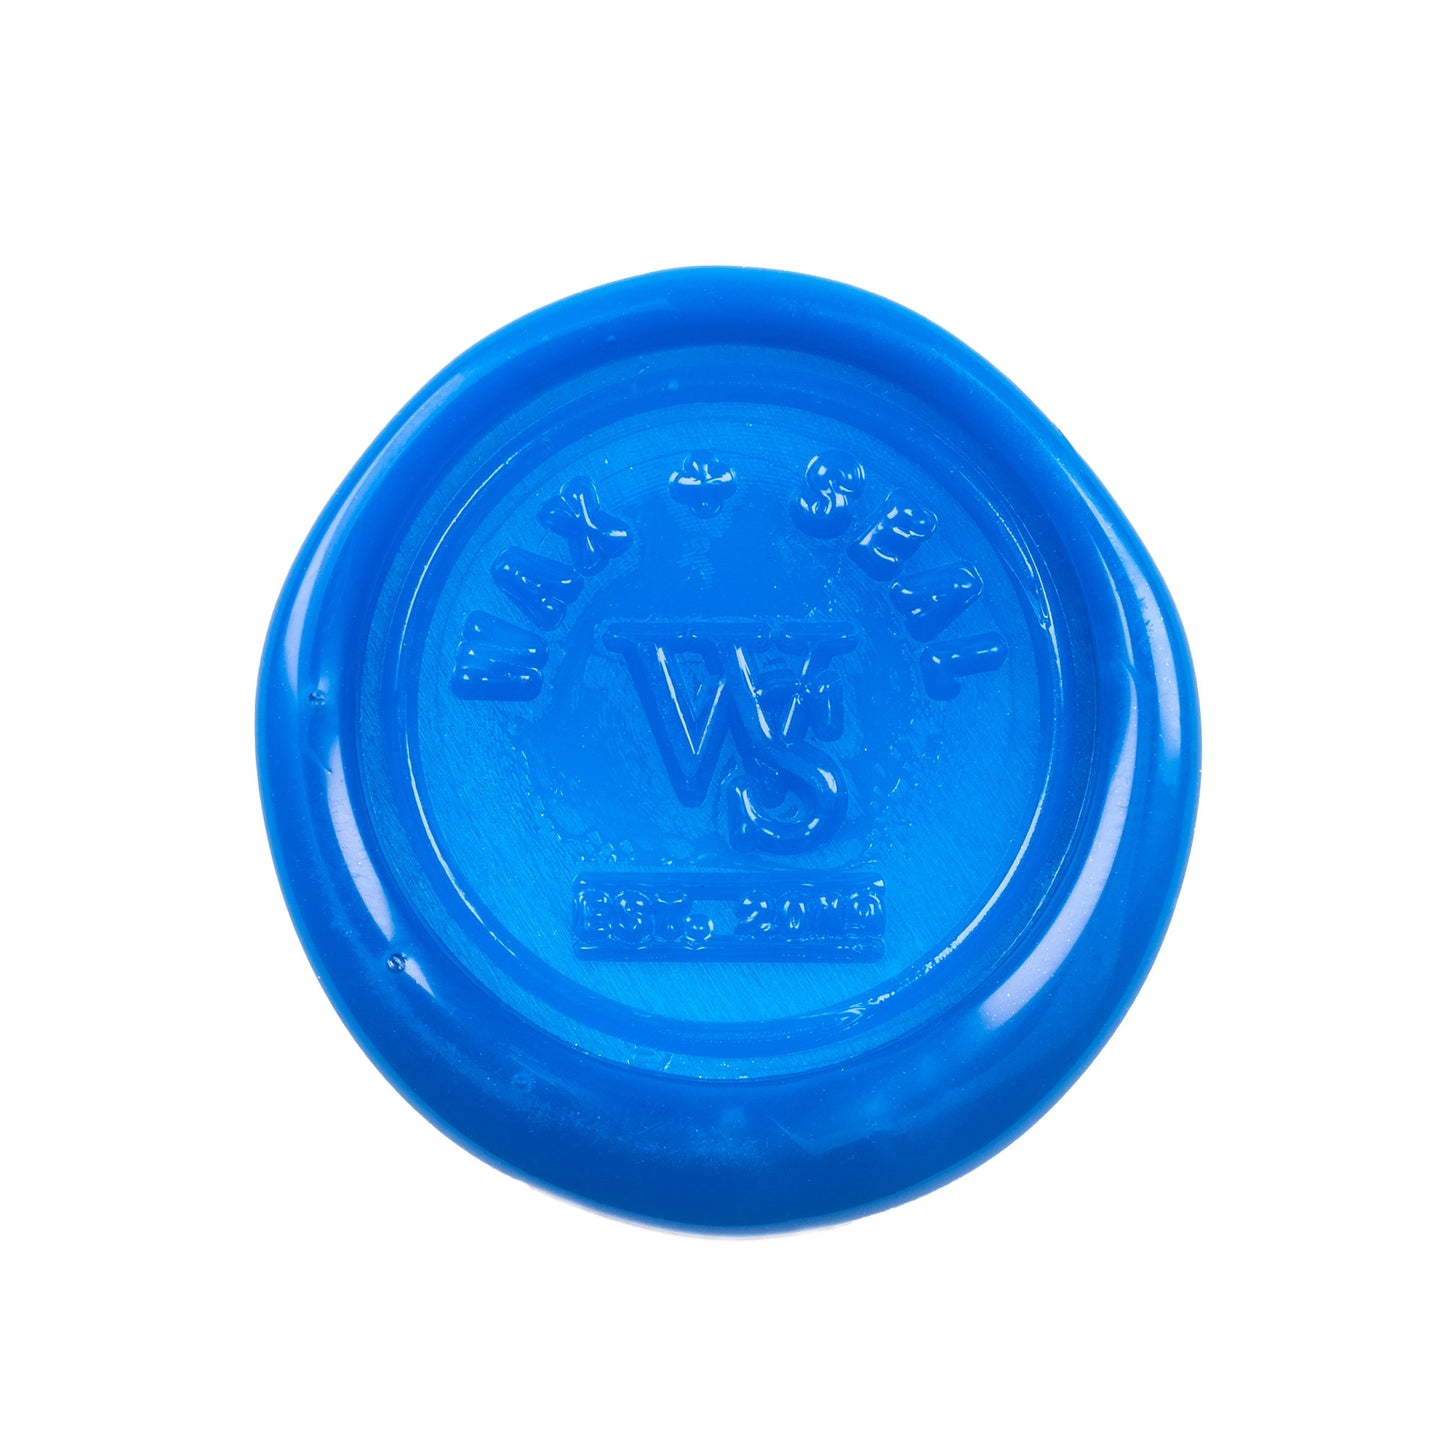 Spanish Blue Wax Beads (Discontinued)